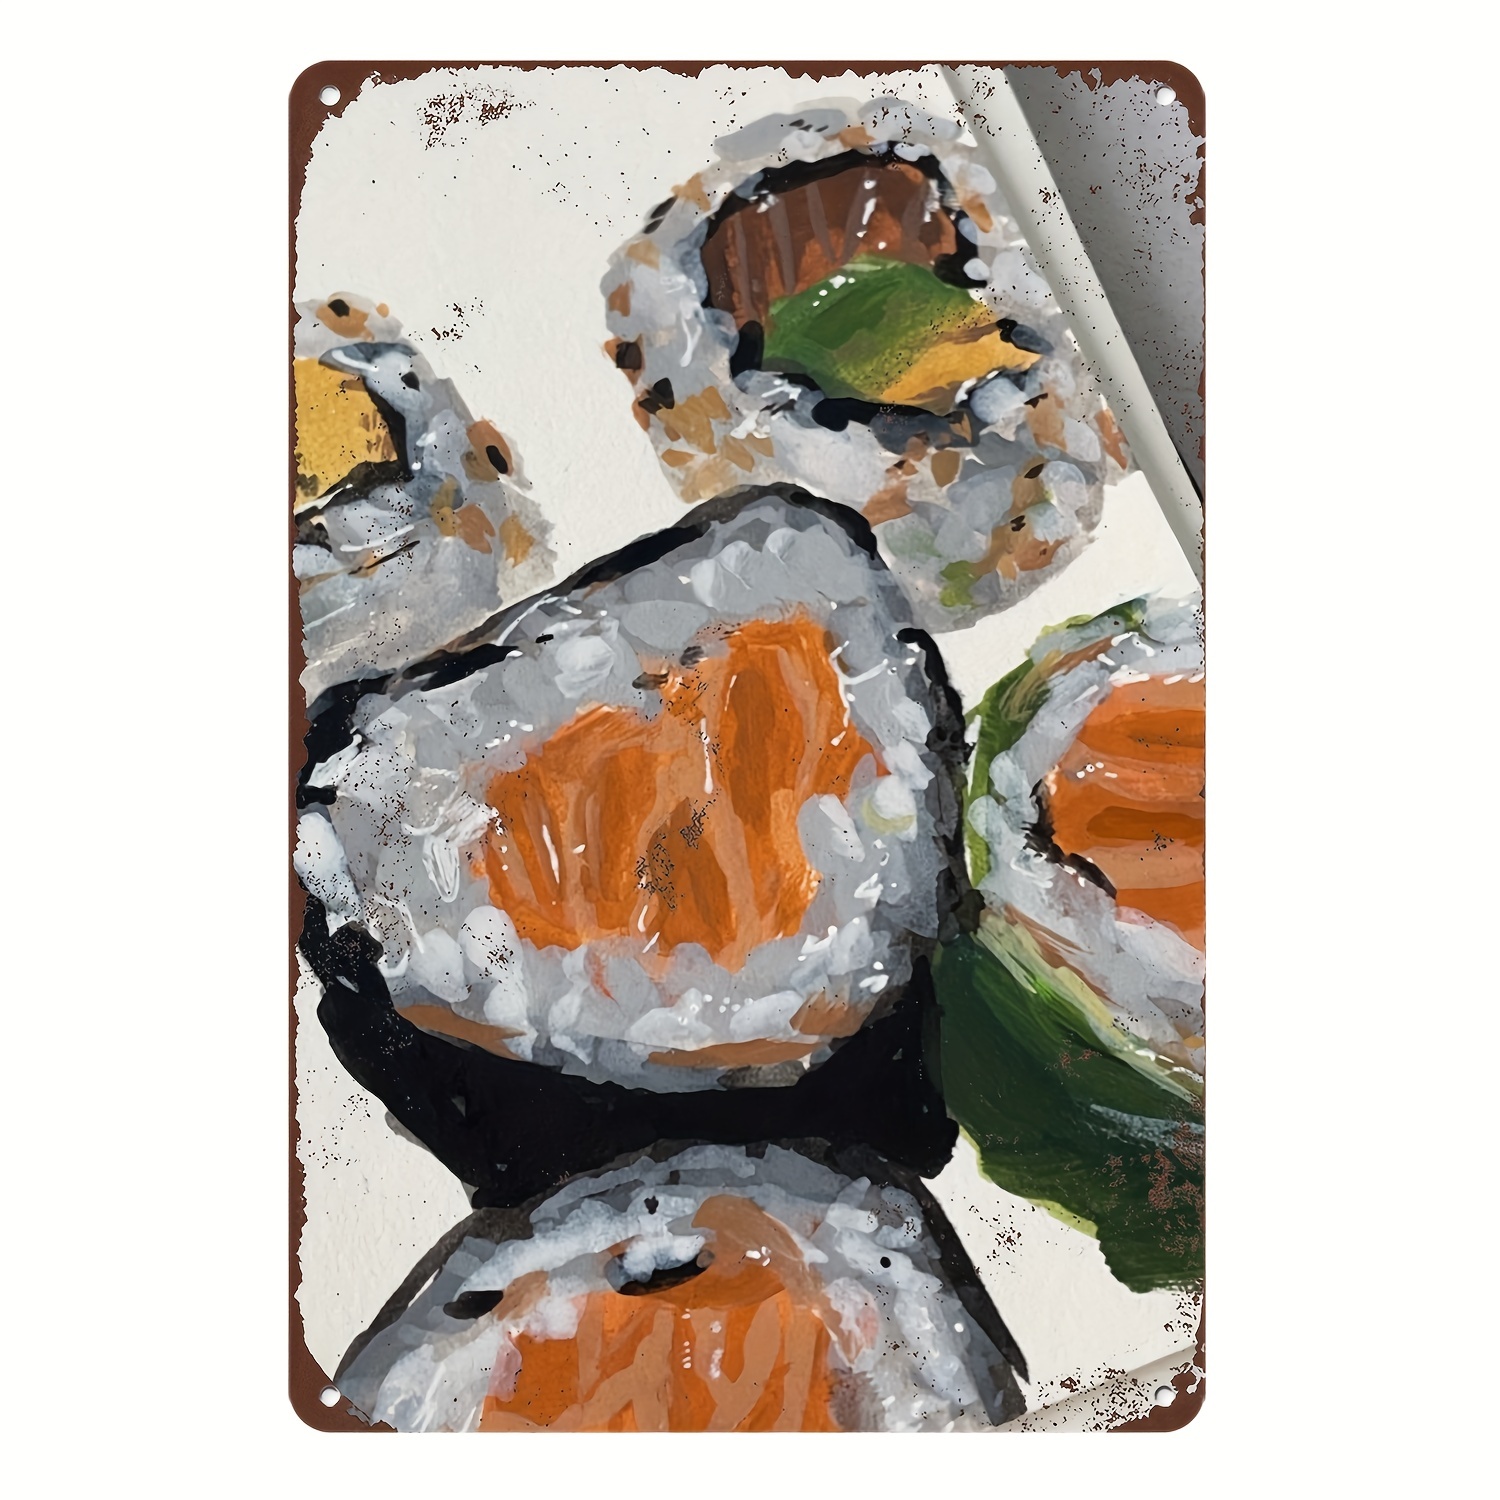 6pcs Sushi Tool Set Including Plastic Sushi Mold, Nori Seaweed, Rice  Paddle, Beginner Sushi Kit, Diy Home Sushi Maker Set, Kitchen Accessories,  Random Style (2pcs/pack)